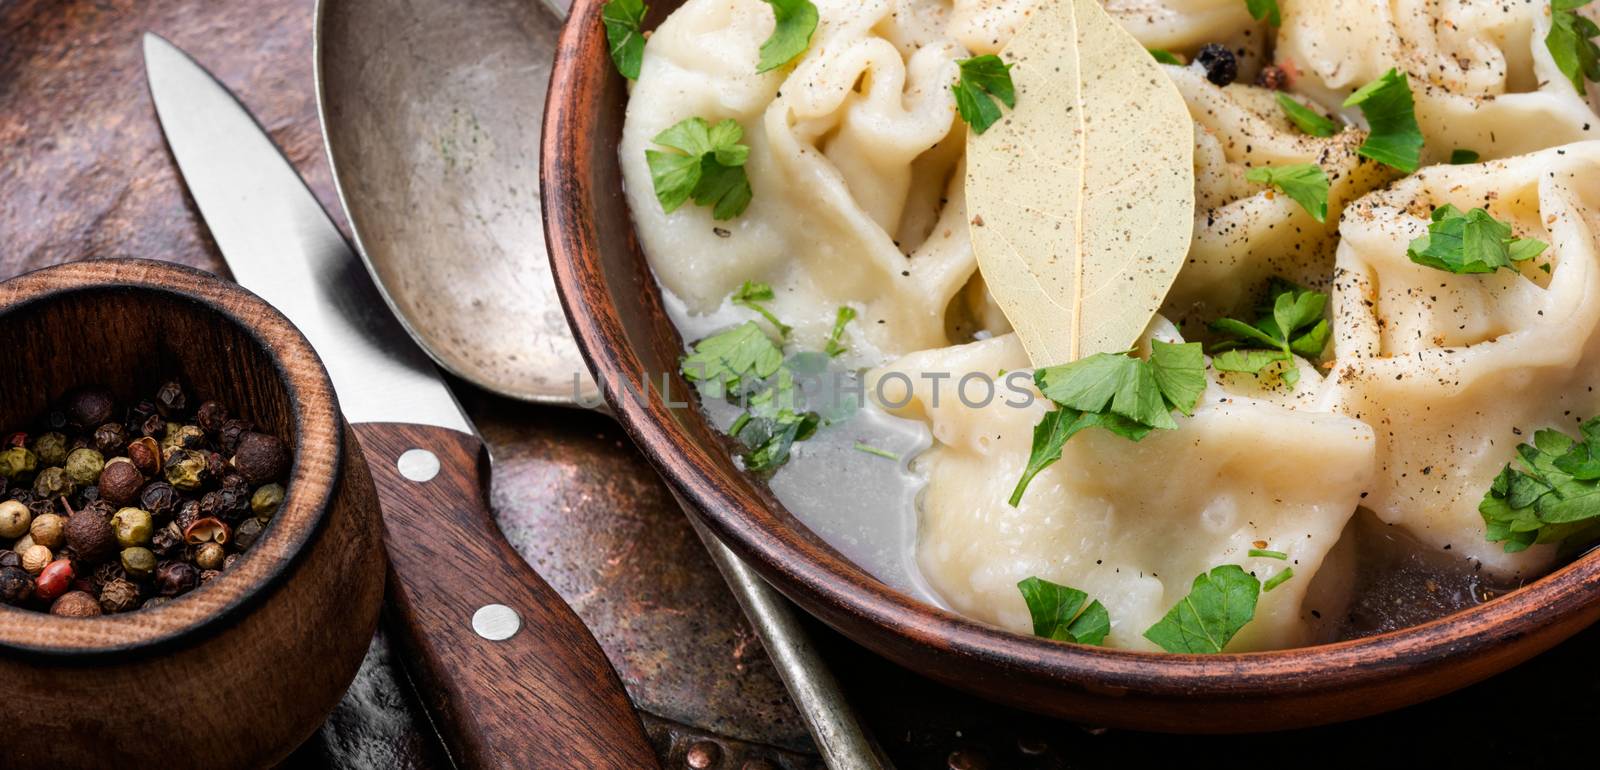 Homemade dumplings in bowl by LMykola